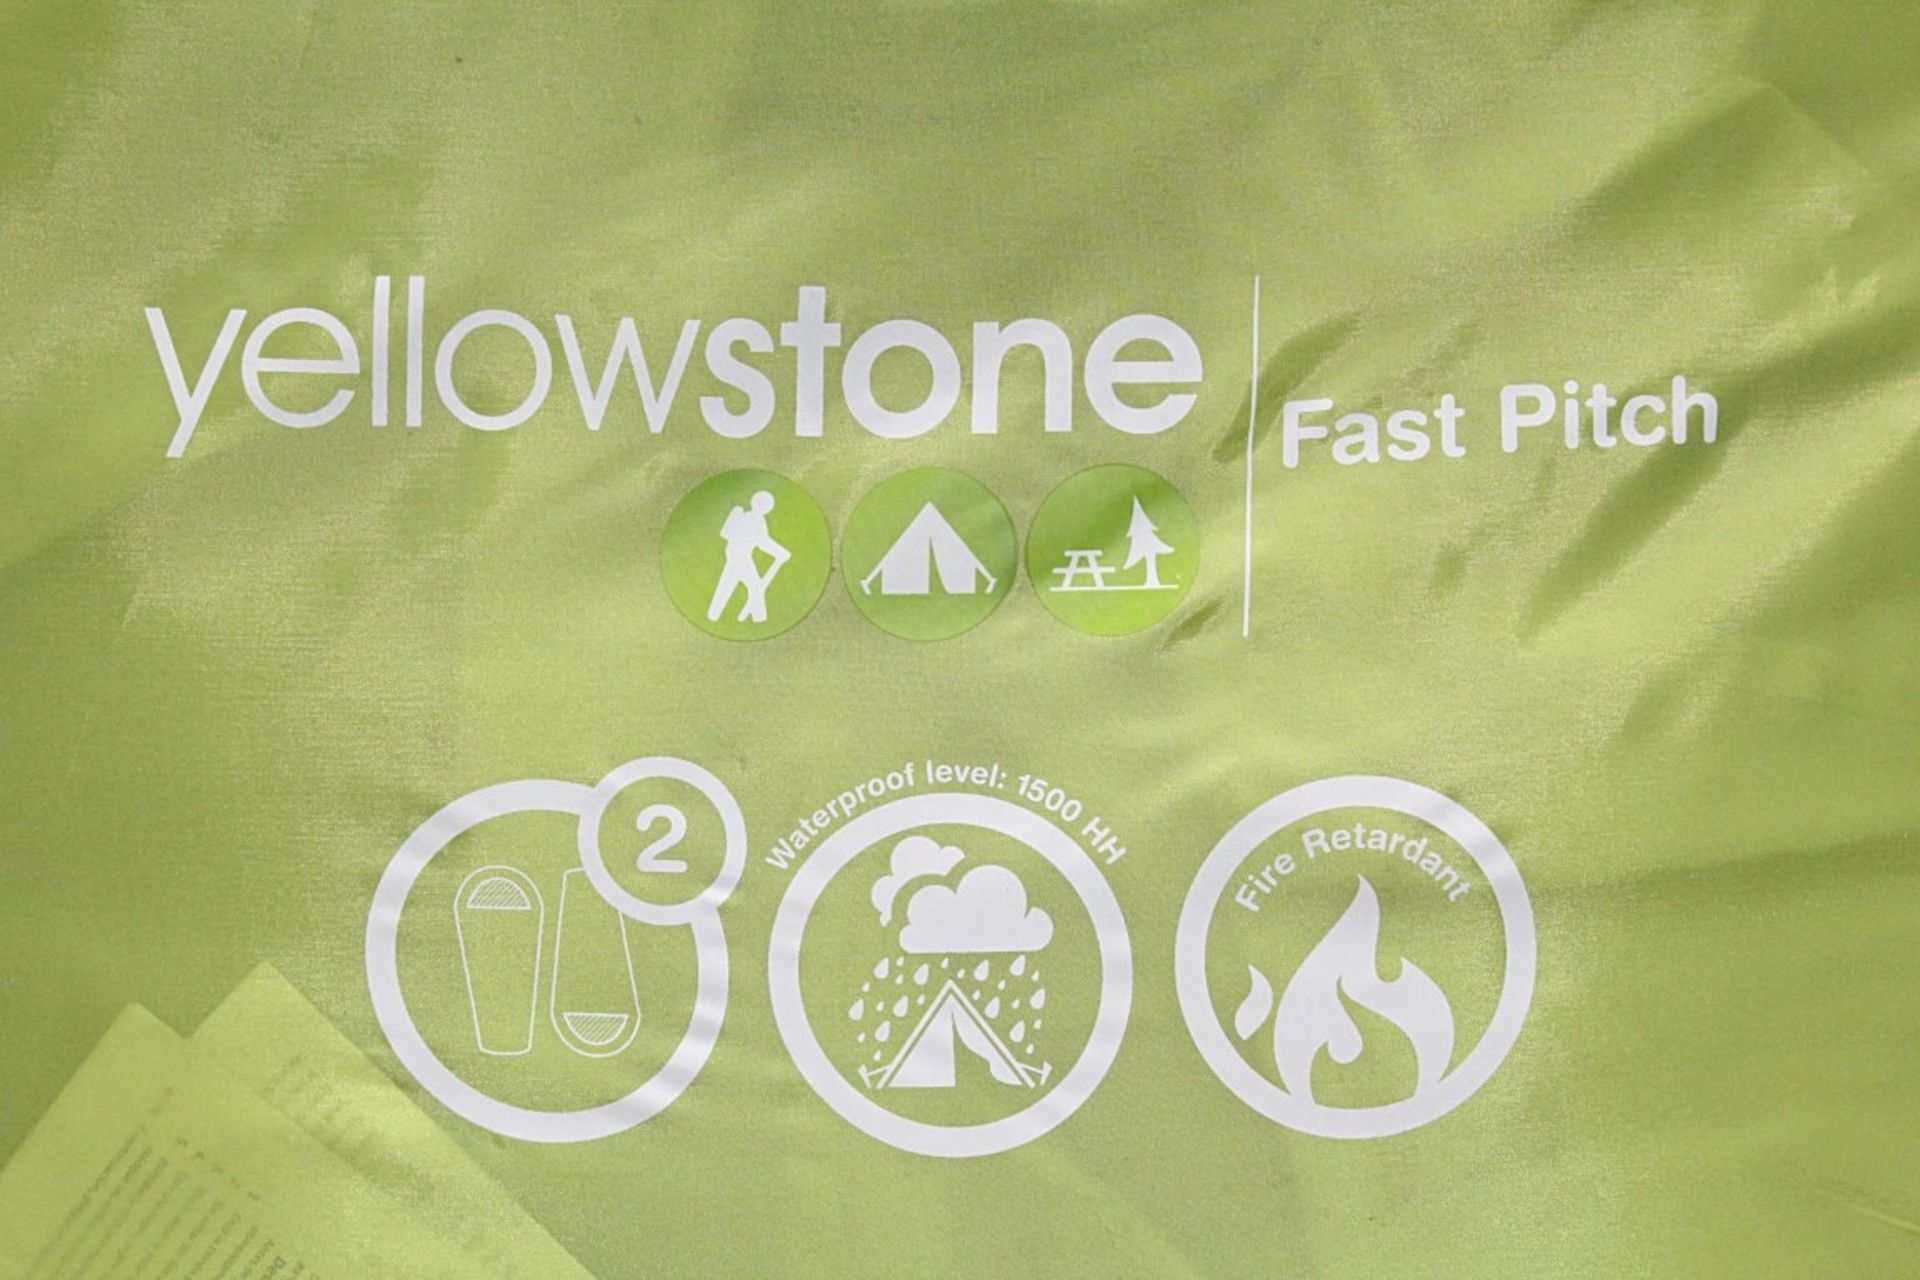 1 x Yellowstone Fast Pitch 2-Man Pop-up Tent In Green (TT010) - Fire Retardant - Waterproof - - Image 3 of 5